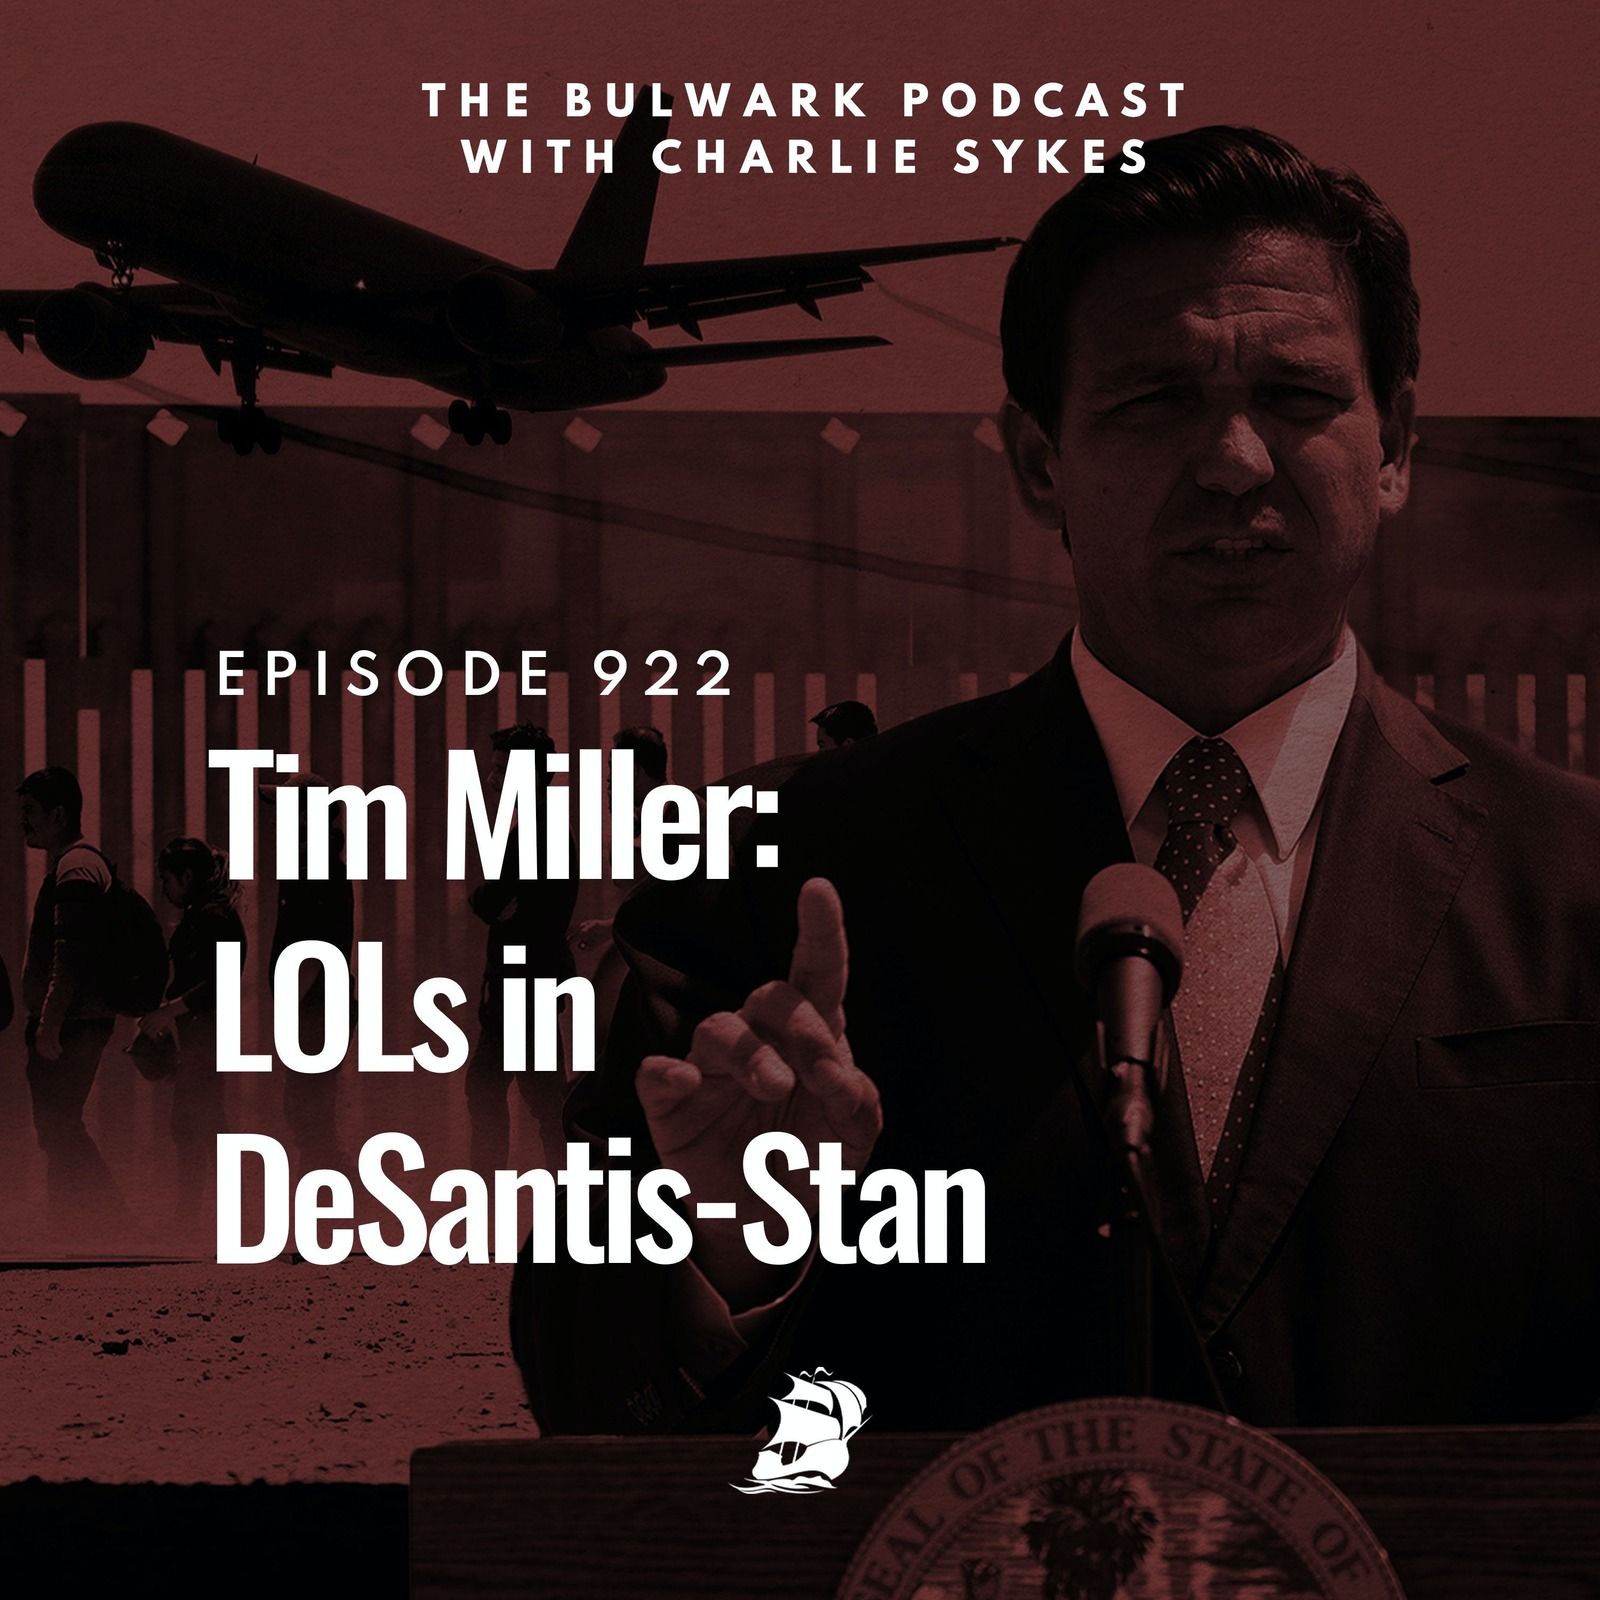 Tim Miller: LOLs in DeSantis-Stan